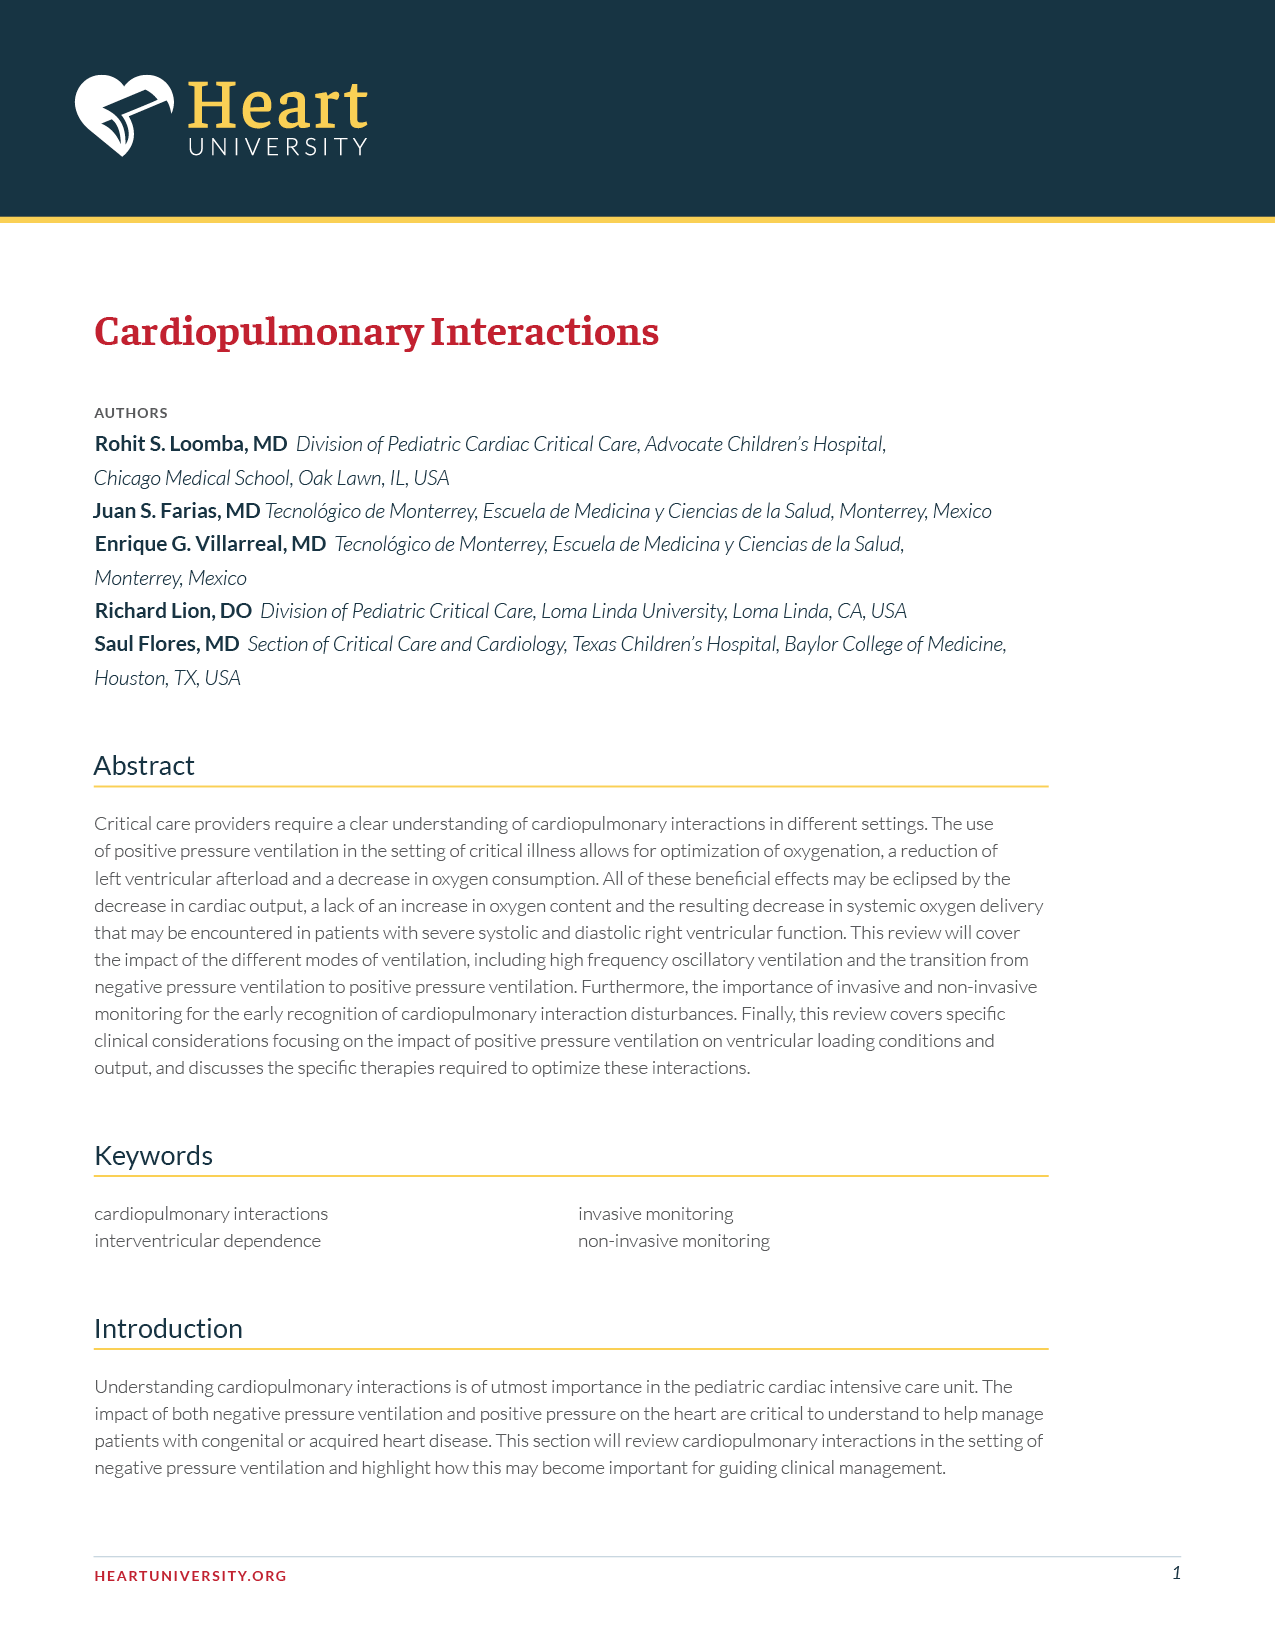 Cardiac ICU - Cardiopulmonary Interactions